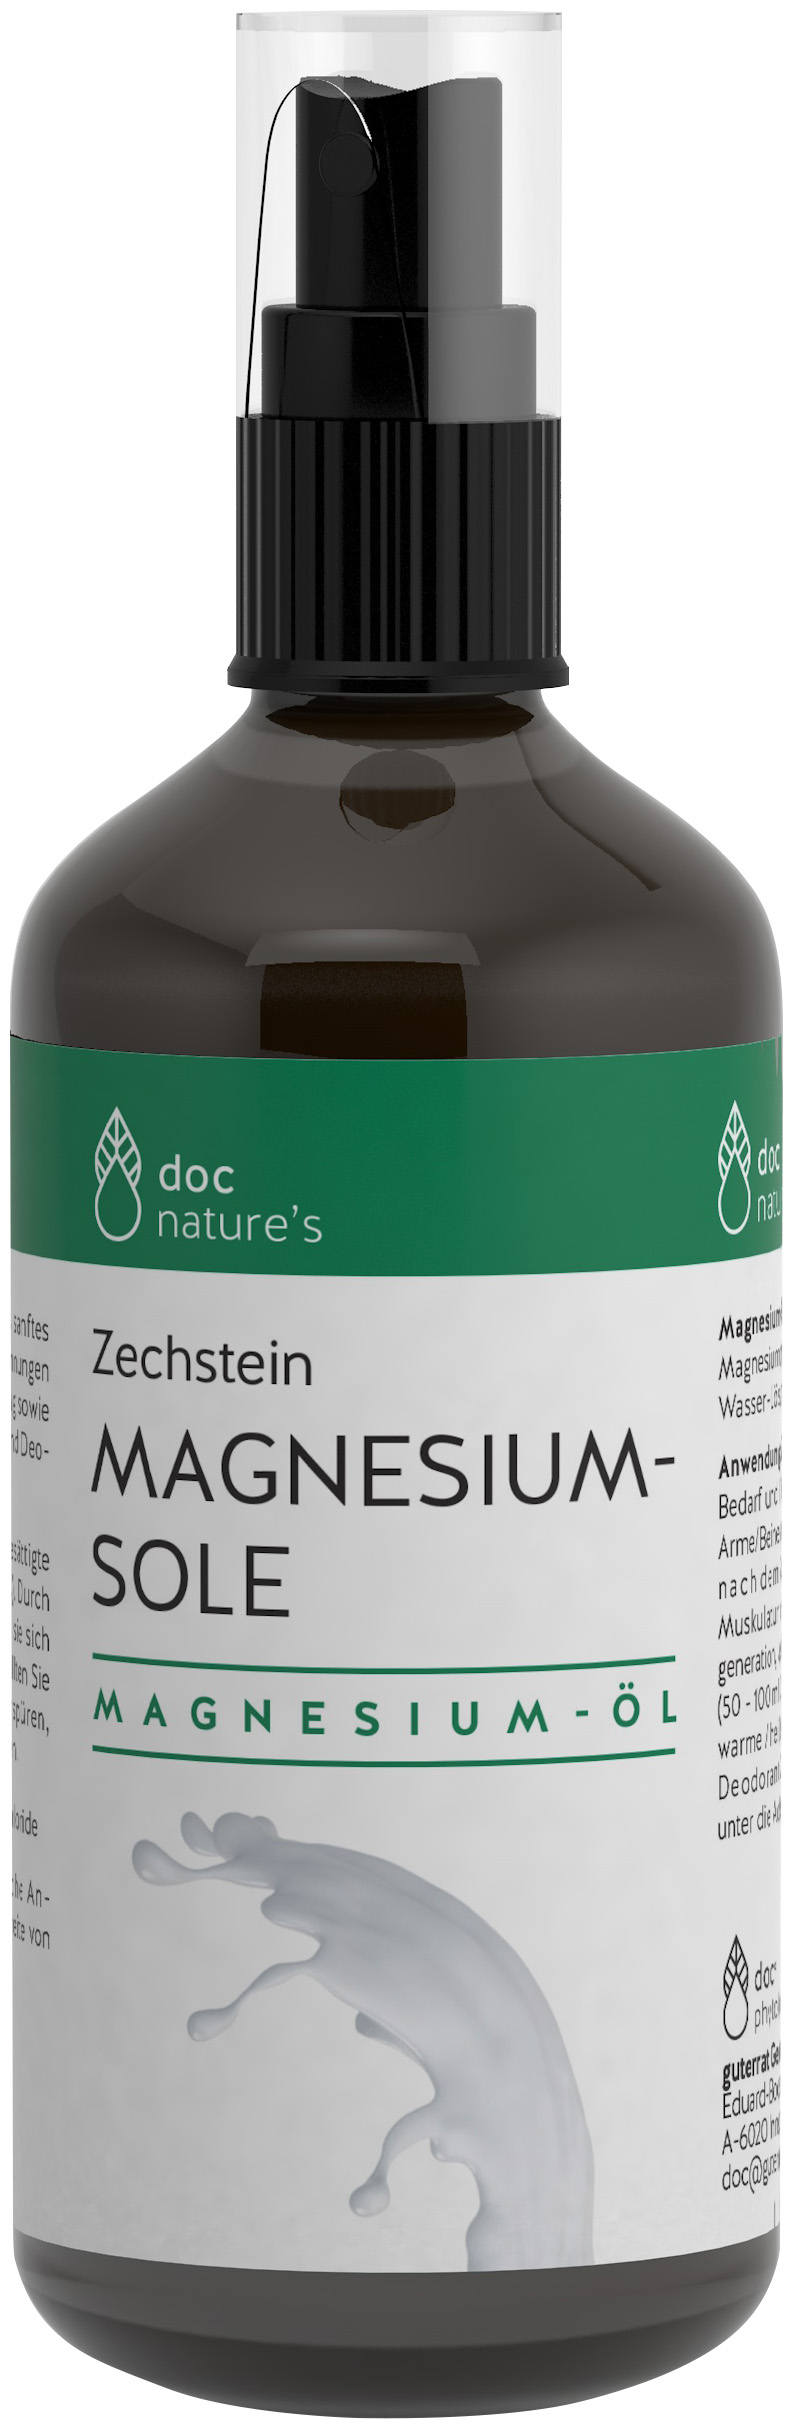 doc nature’s Zechstein MAGNESIUM-SOLE